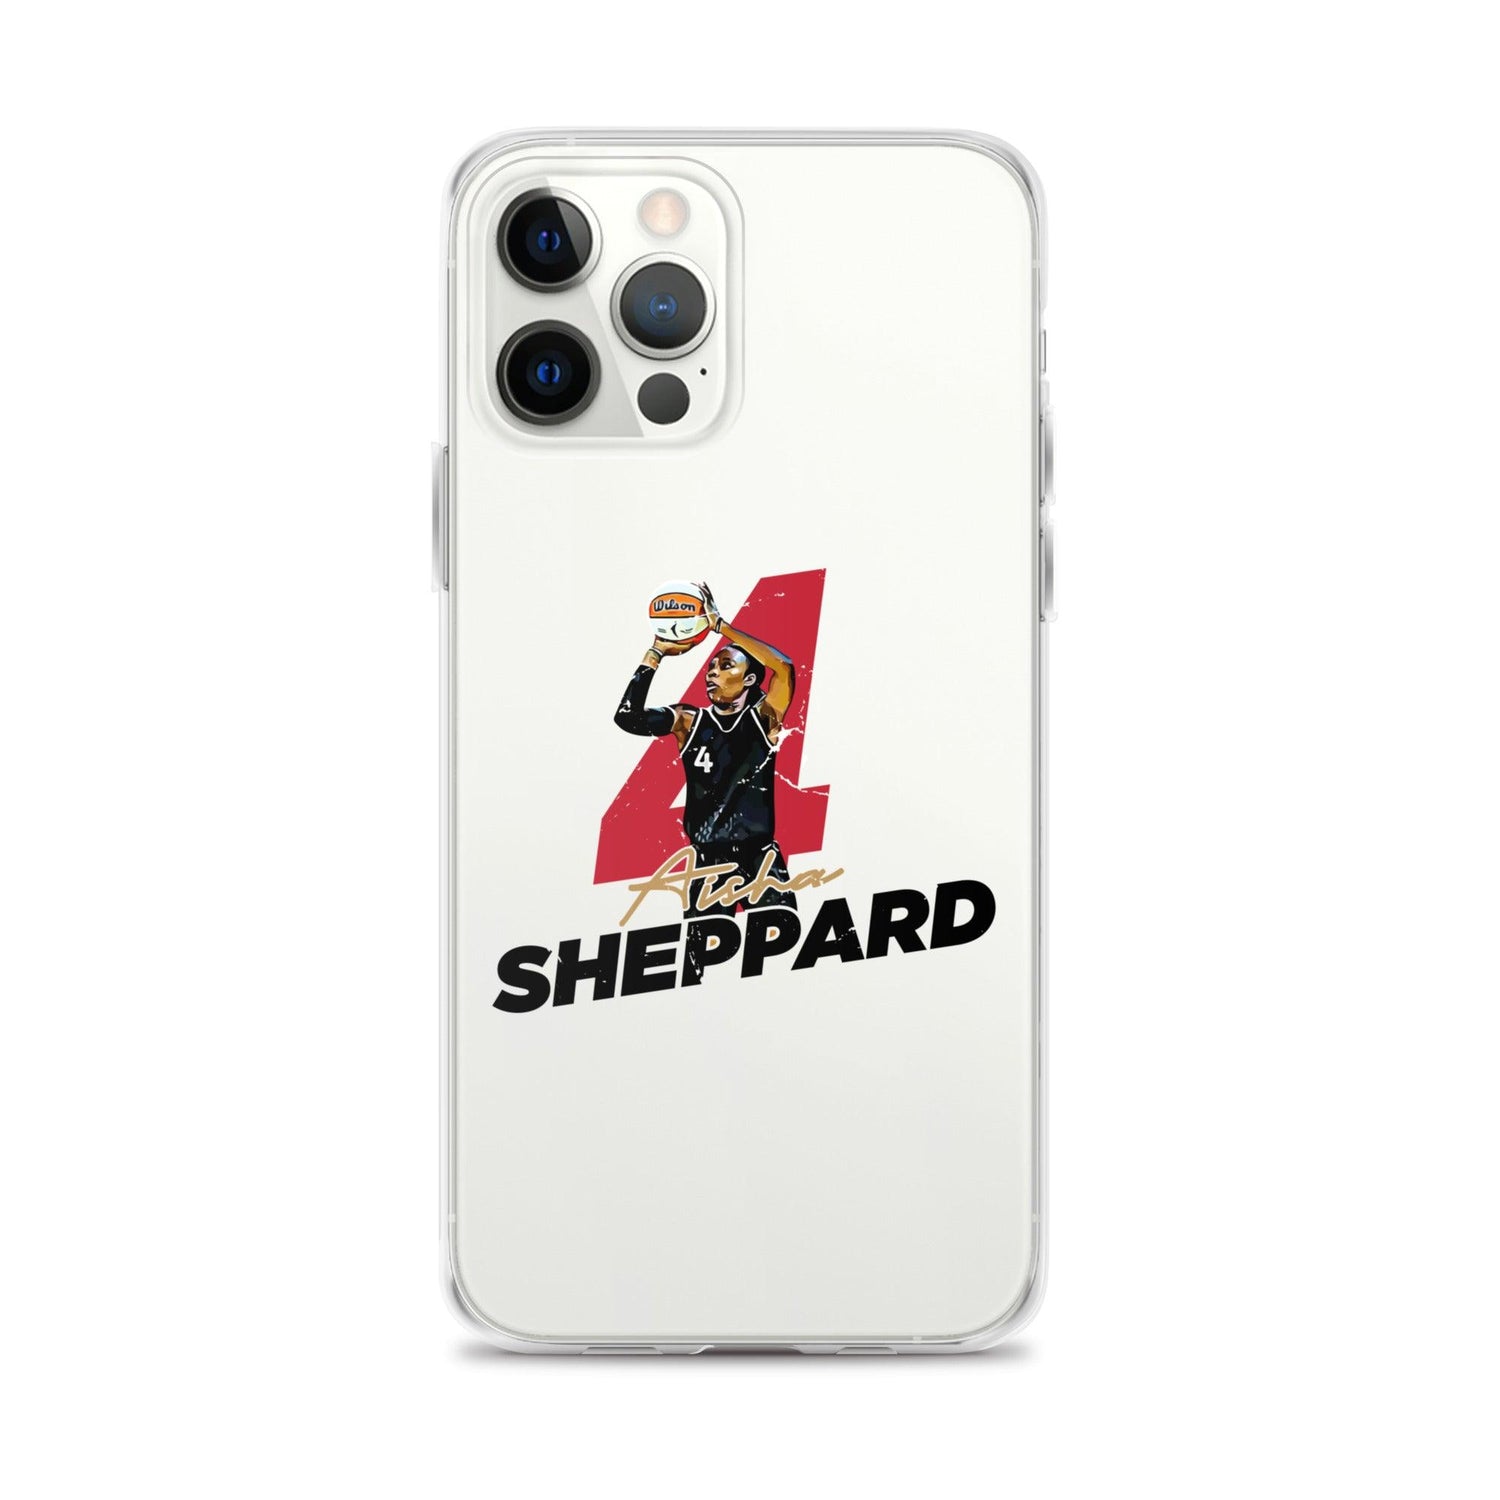 Aisha Sheppard "Pro Style" iPhone Case - Fan Arch